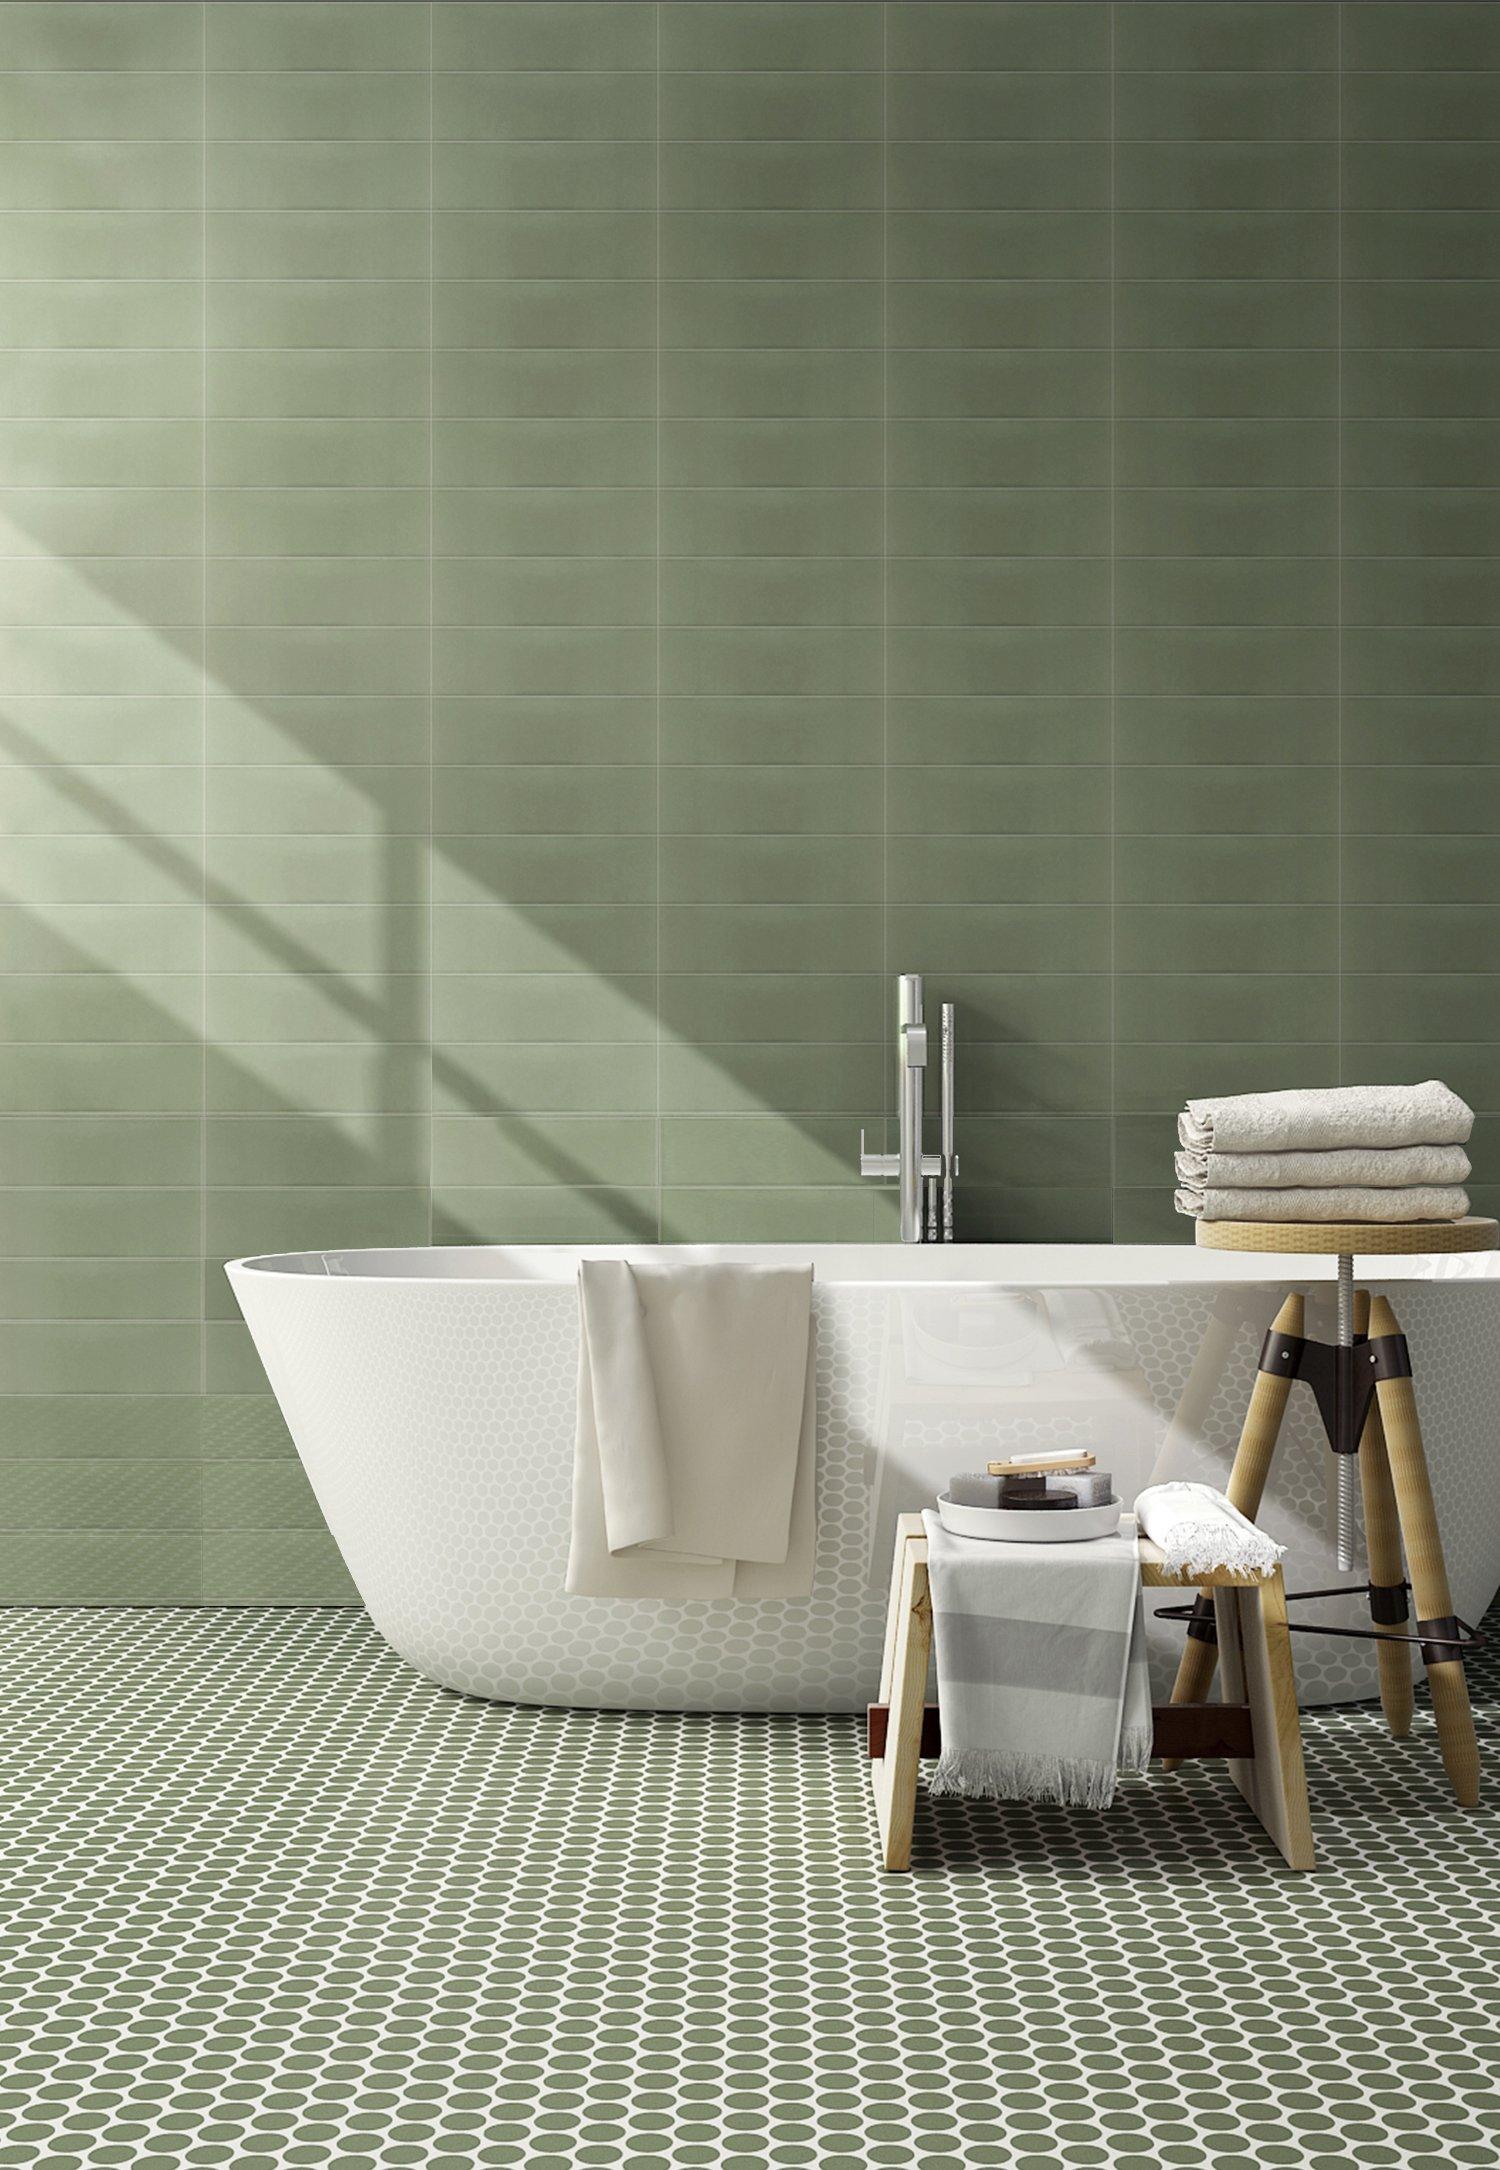 Olive Iii Polished Ceramic Wall Tile, Olive Green Bathroom Wall Tiles